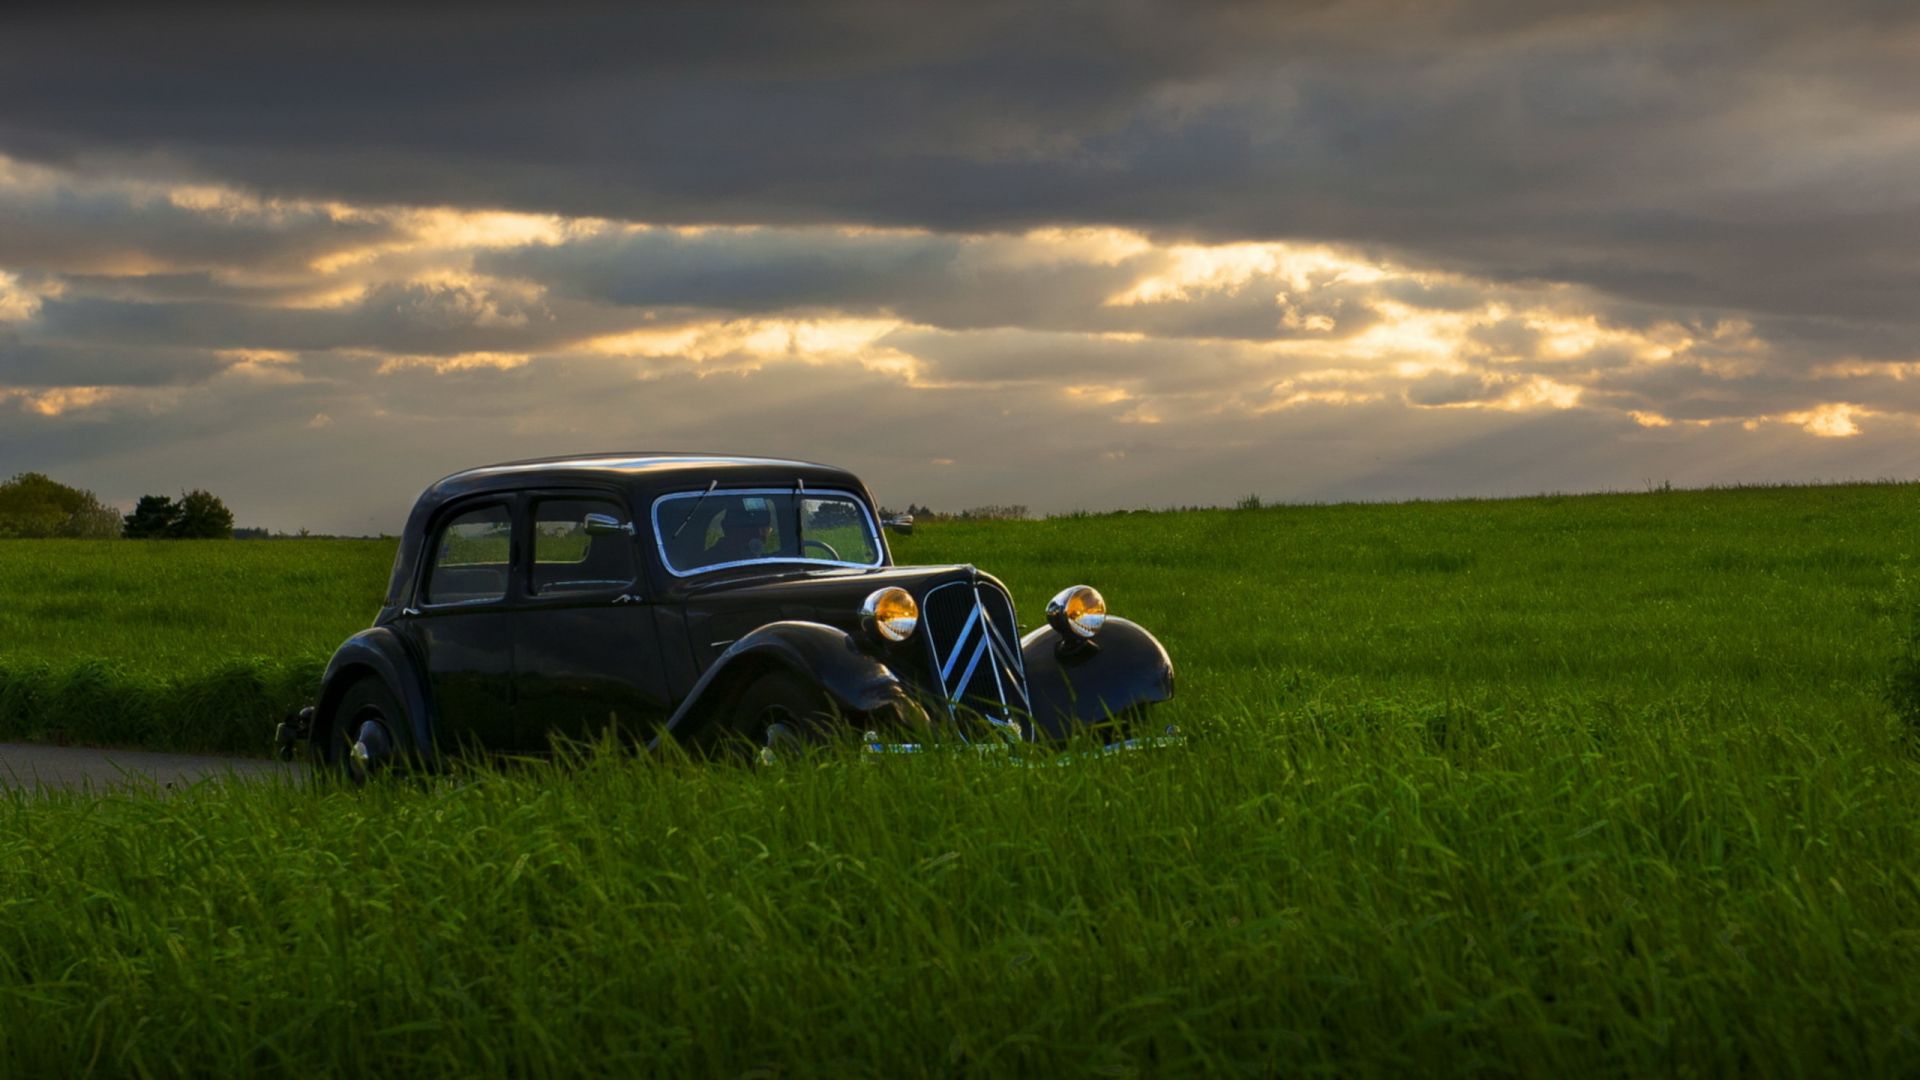 Wallpaper Classic car in grass field, landscape